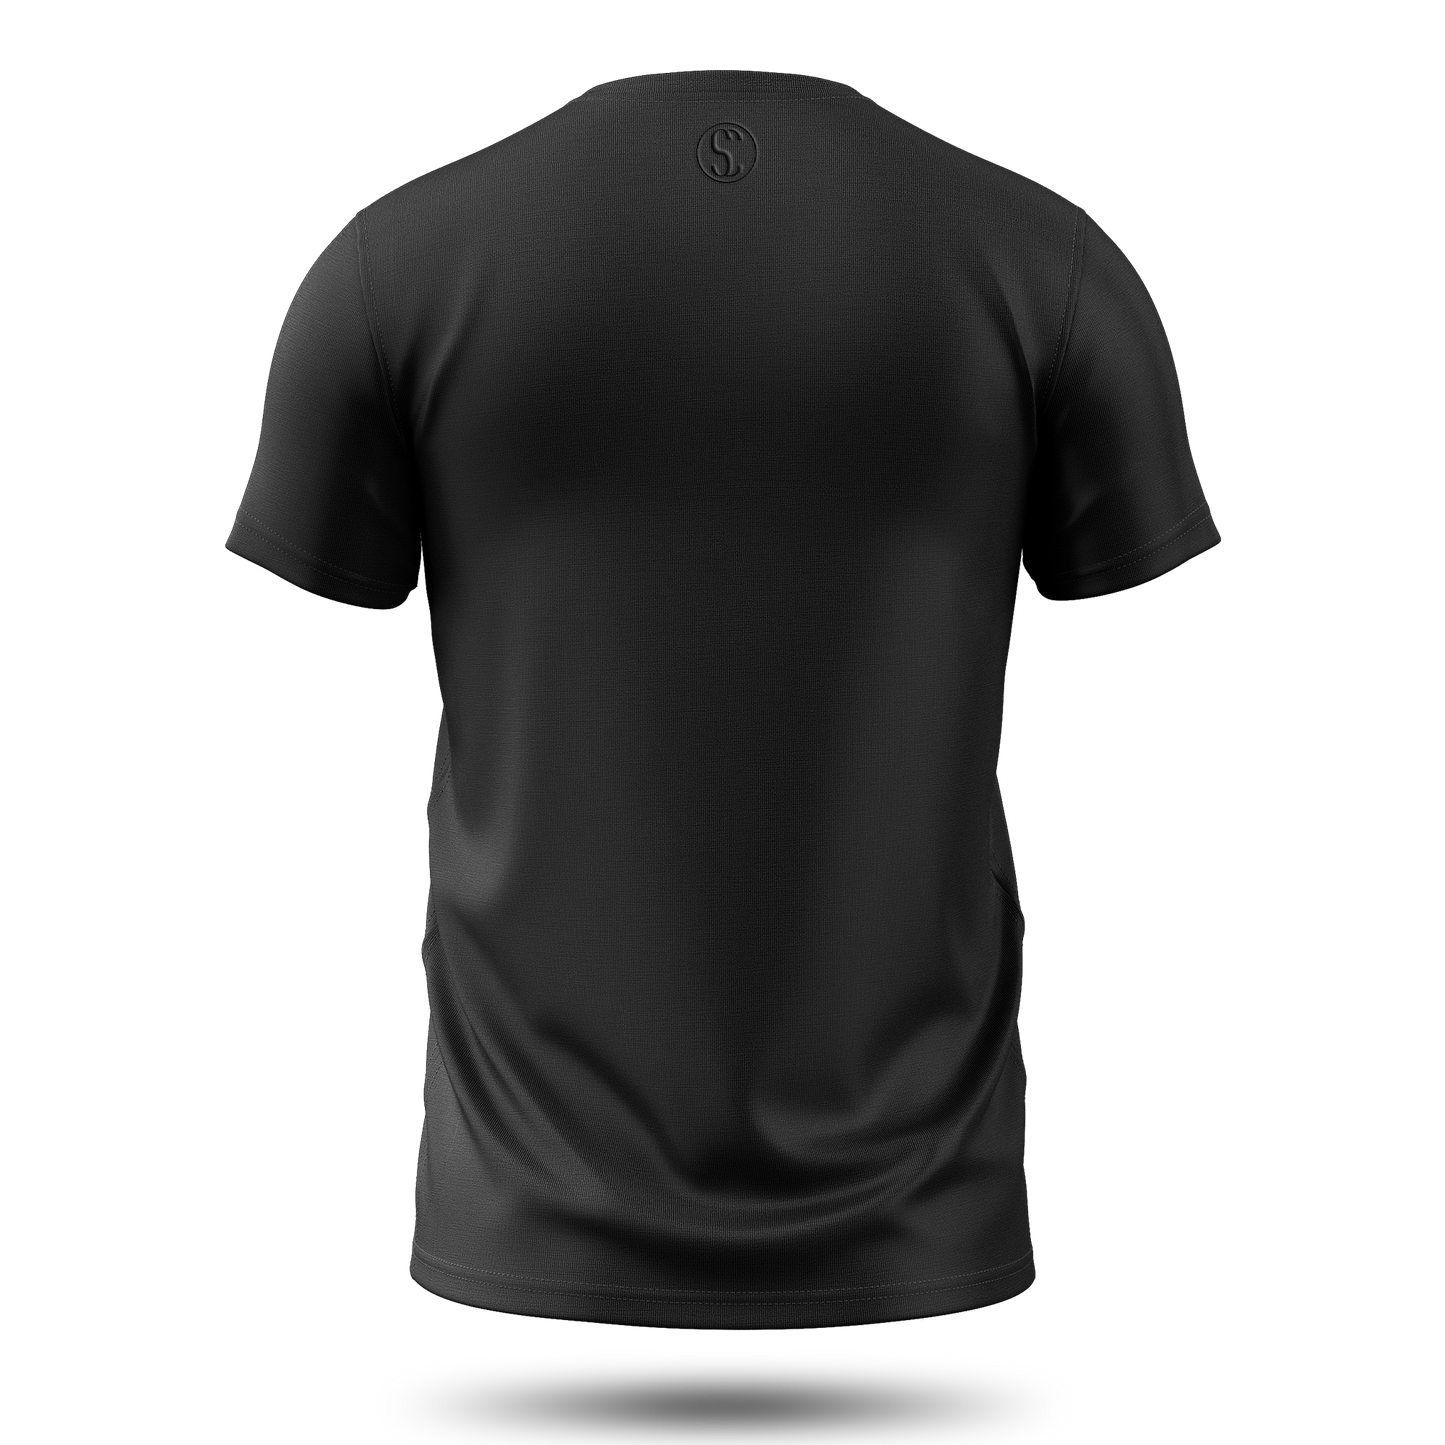 Men's Premium Cotton Black Short Sleeve T-Shirt